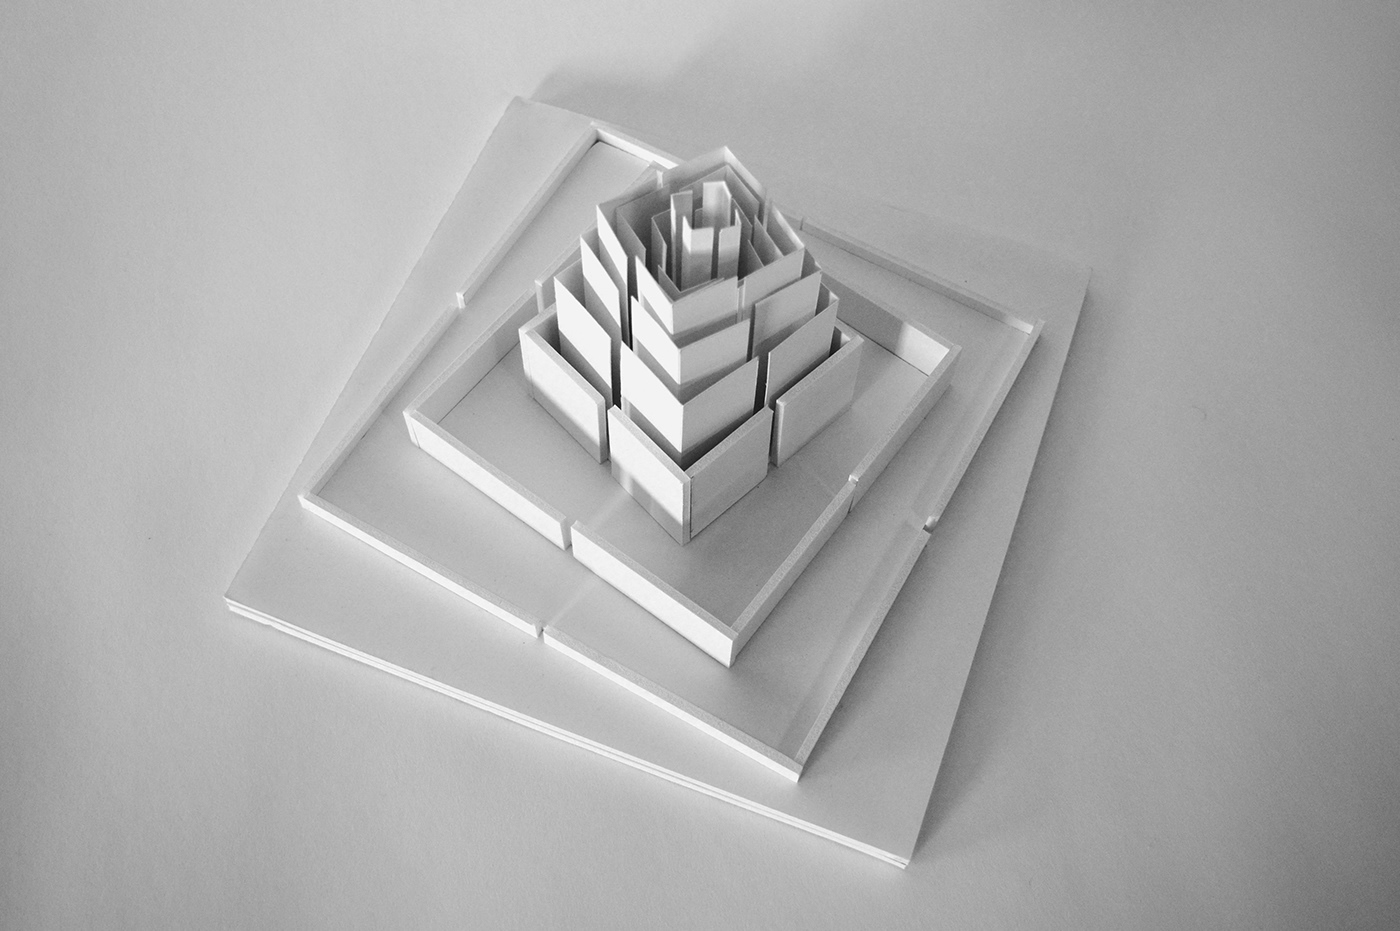 Advanced Studio studio architecture risd design monument structure archipelago Island imagination